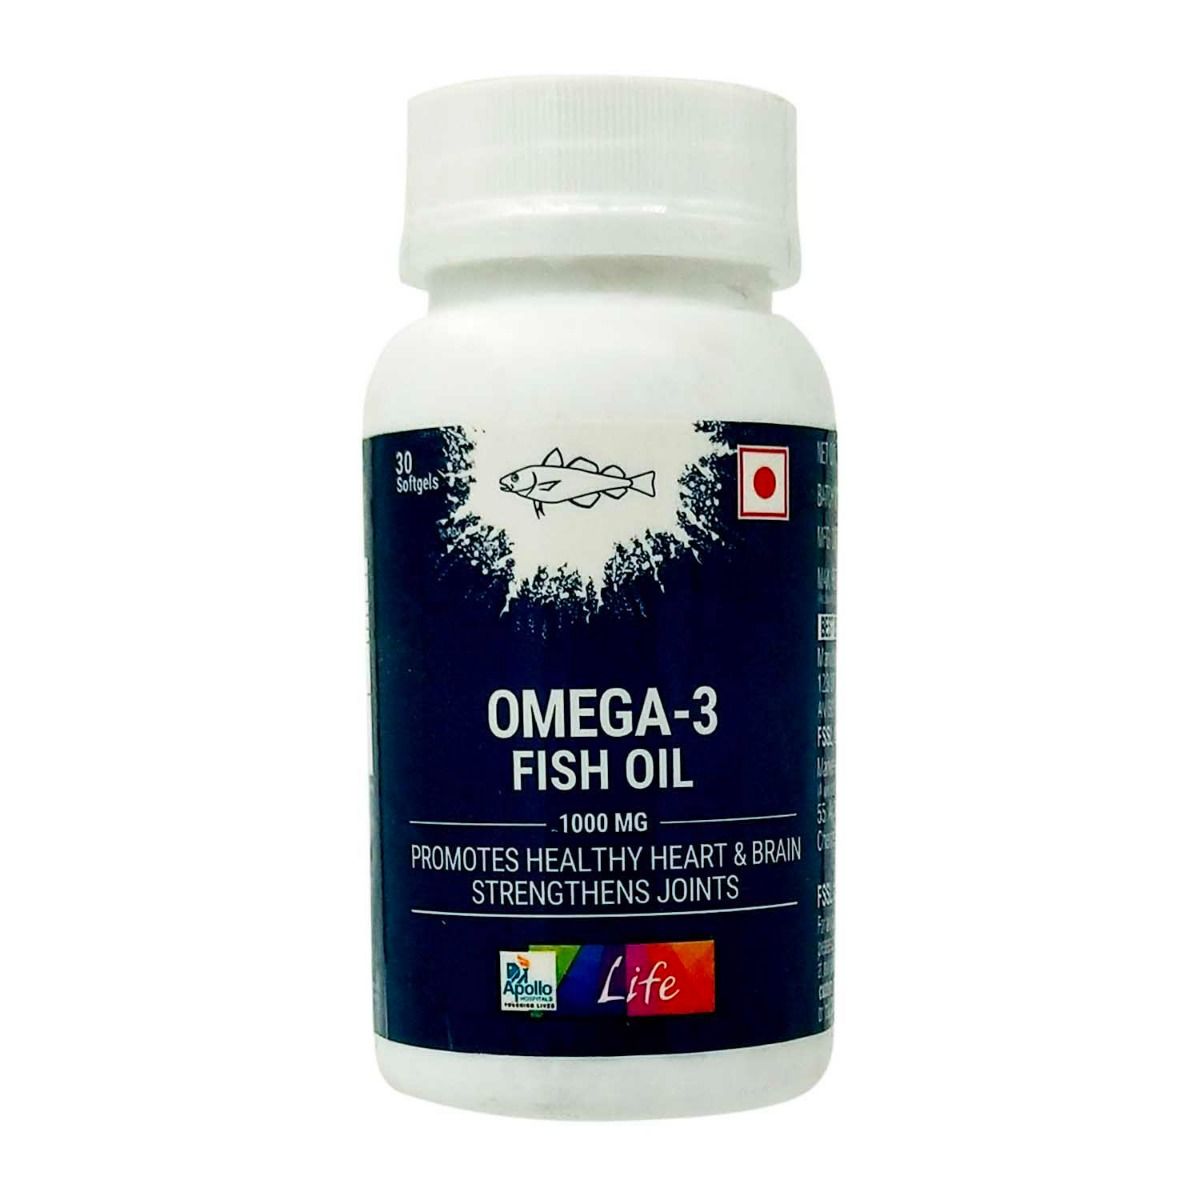 Buy Apollo Life Omega-3 Fish Oil 1000mg, 30 Capsules Online